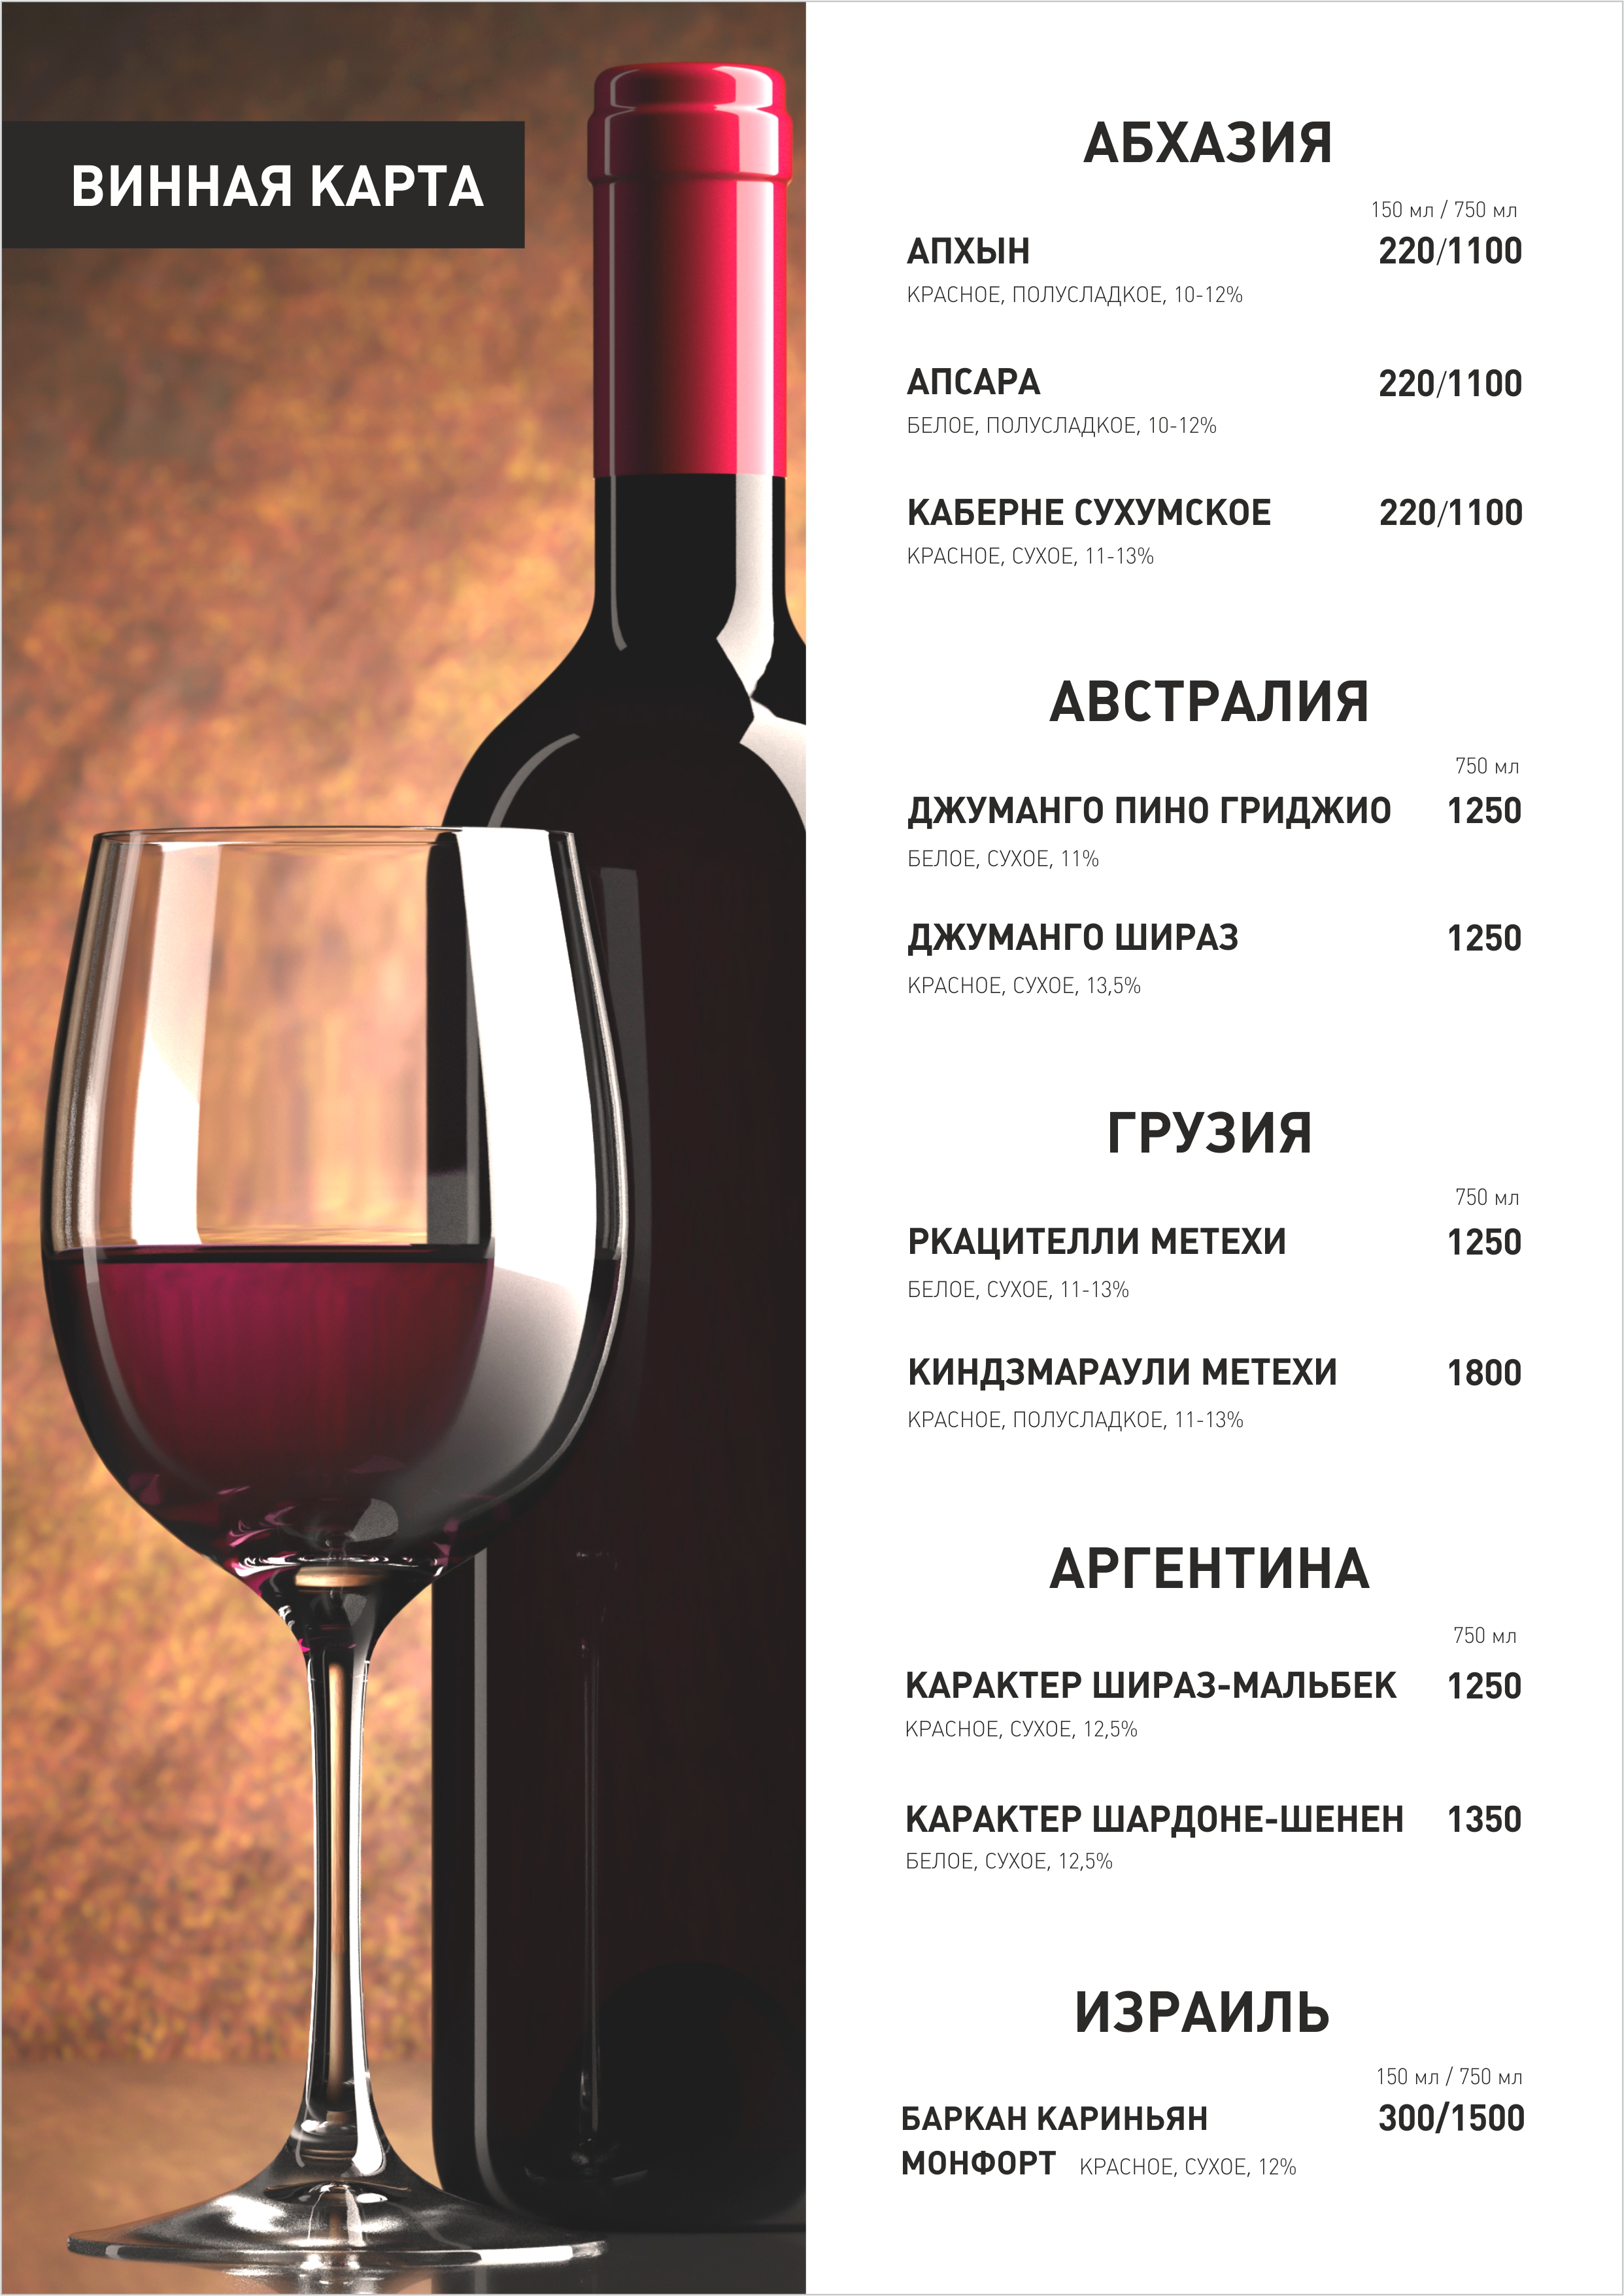 Вино вино сайт санкт петербург. Карта вин ресторана образец. Винная карта ресторана. Винная карта меню. Меню вино.